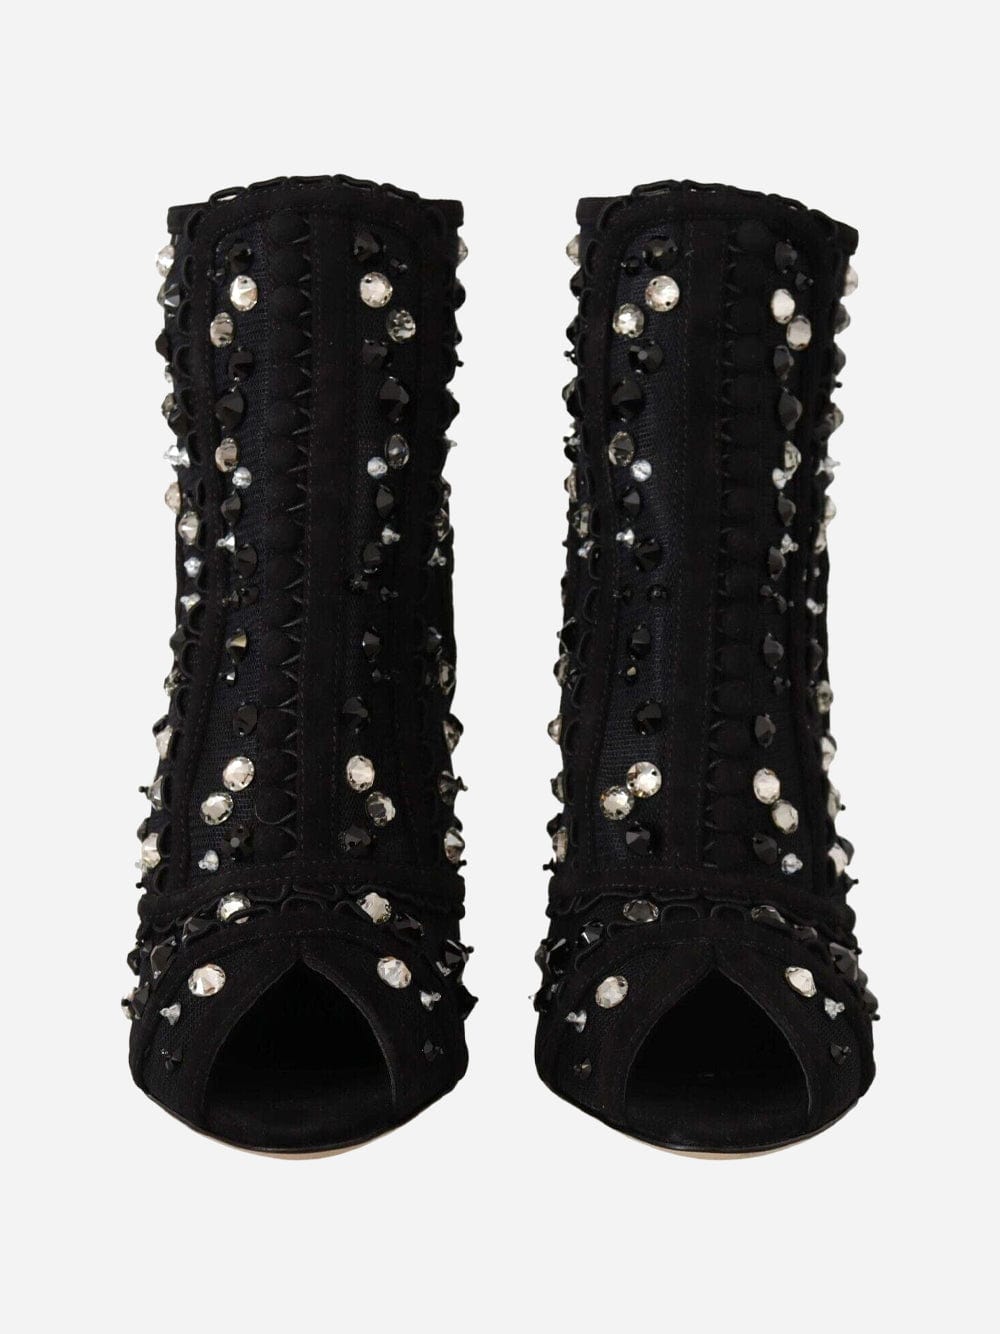 Dolce & Gabbana Crystal Embellished Ankle Boots